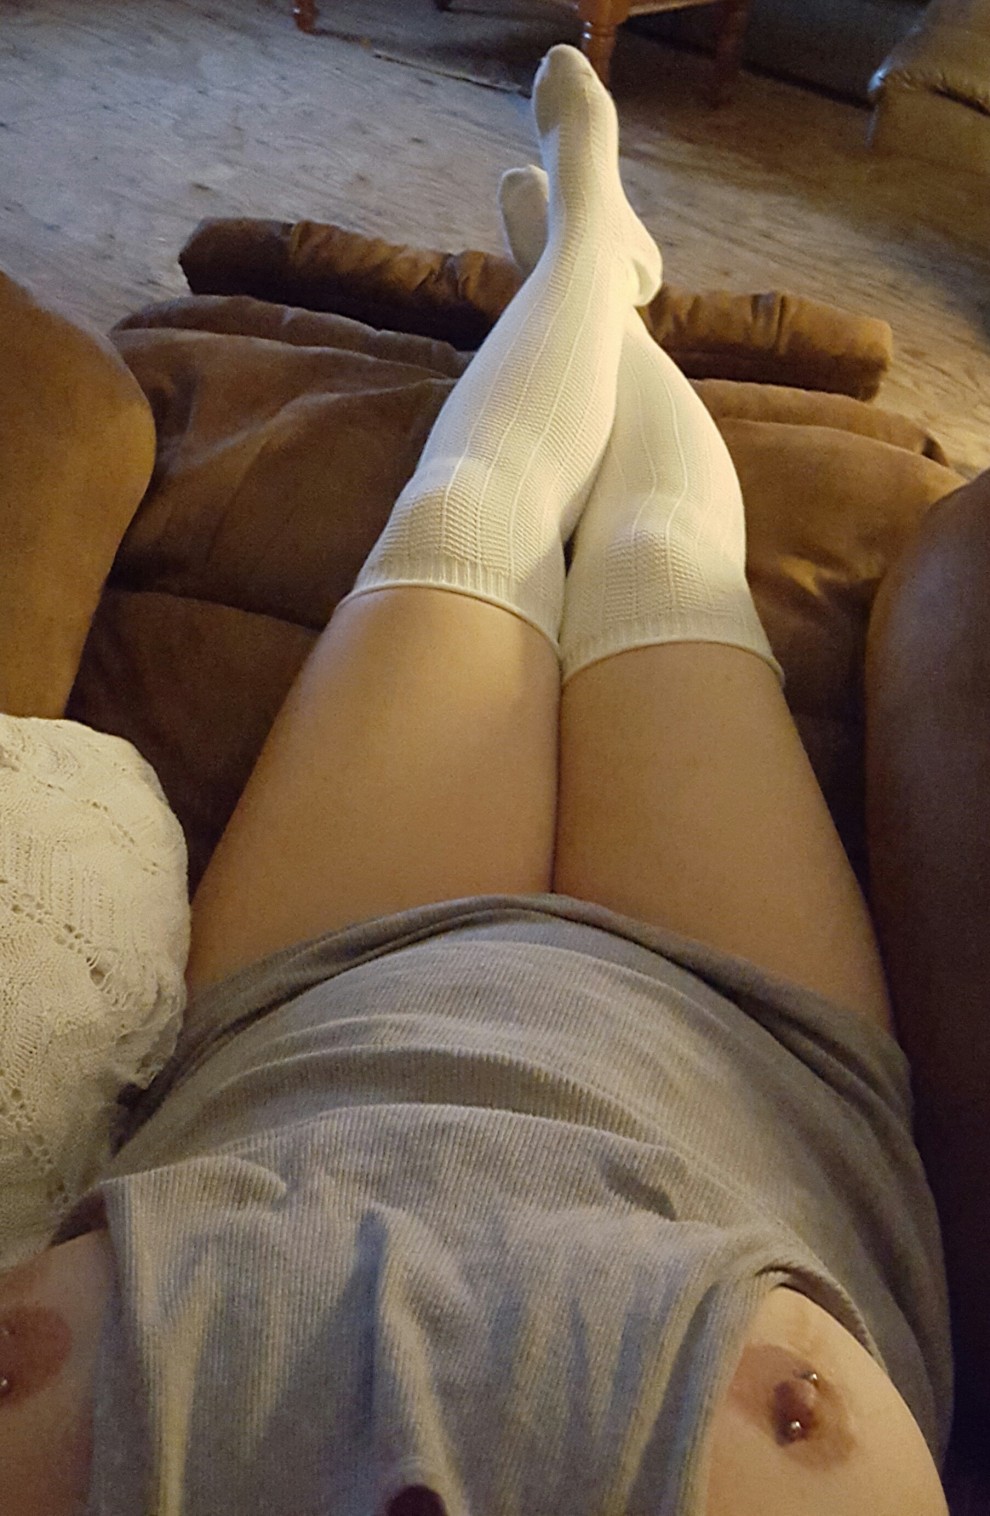 New socks...OH